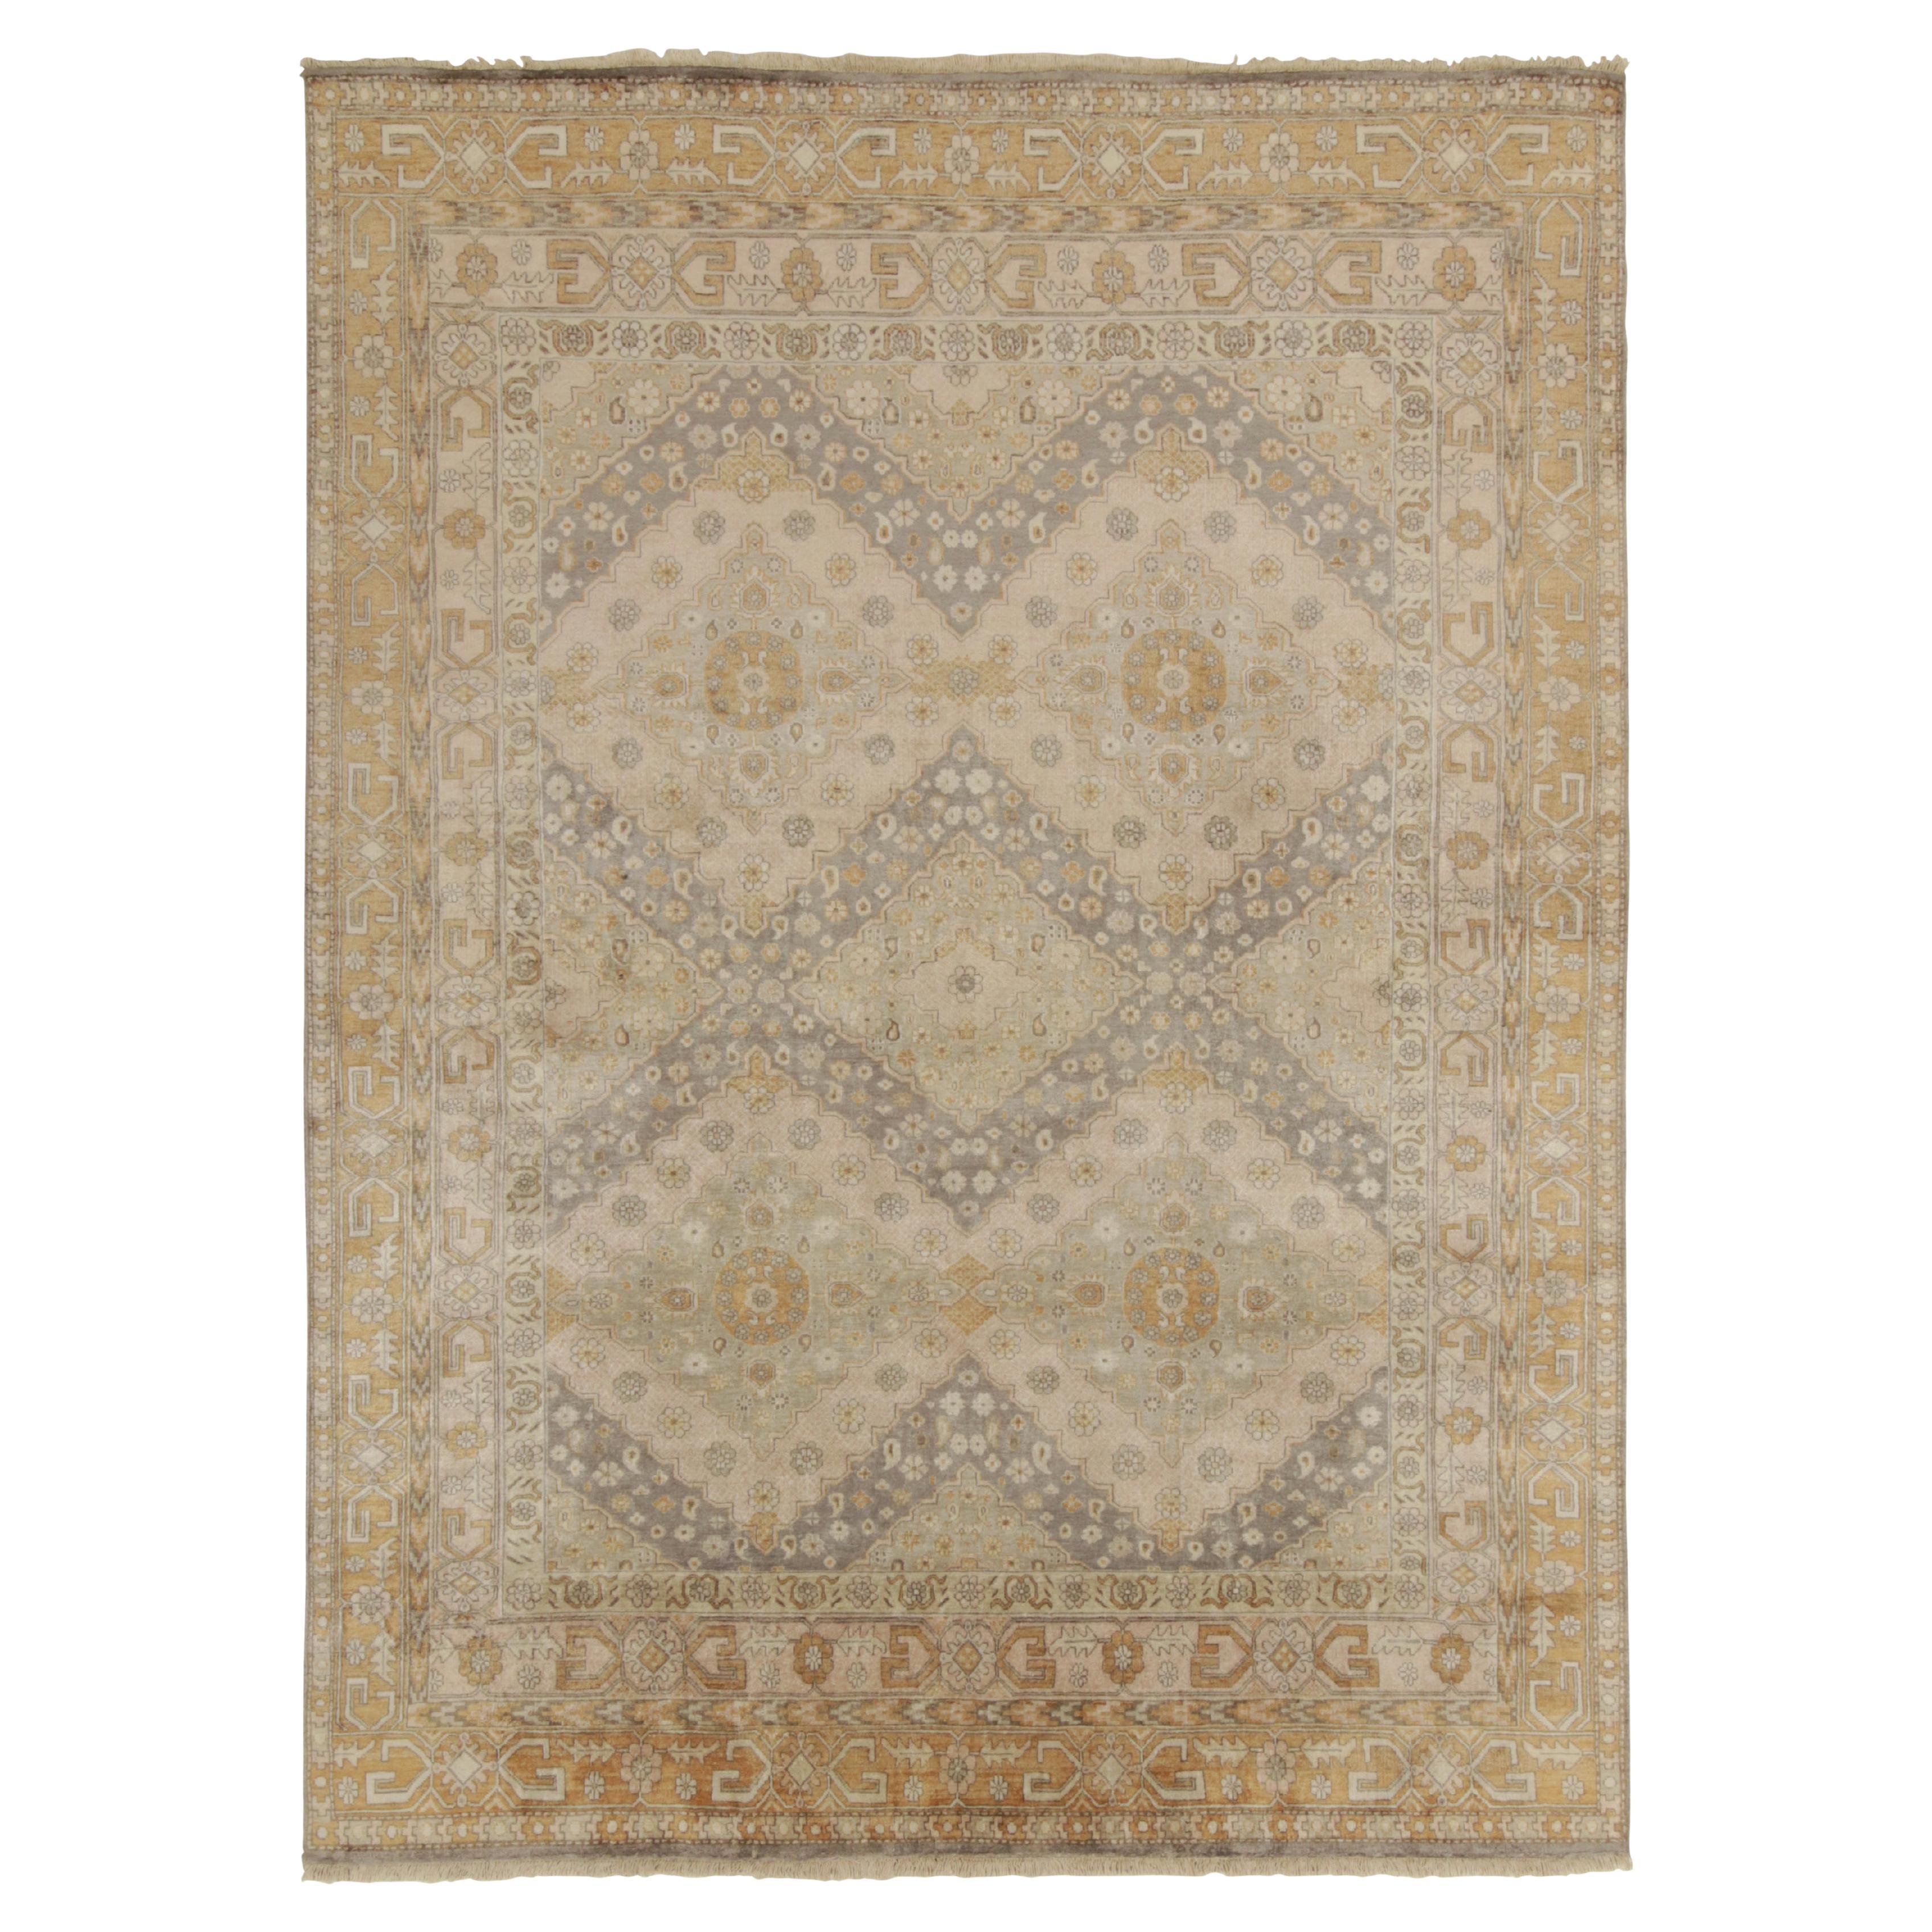 Rug & Kilim’s Classic Khotan style rug in Beige & Gold Diamonds, Floral Patterns